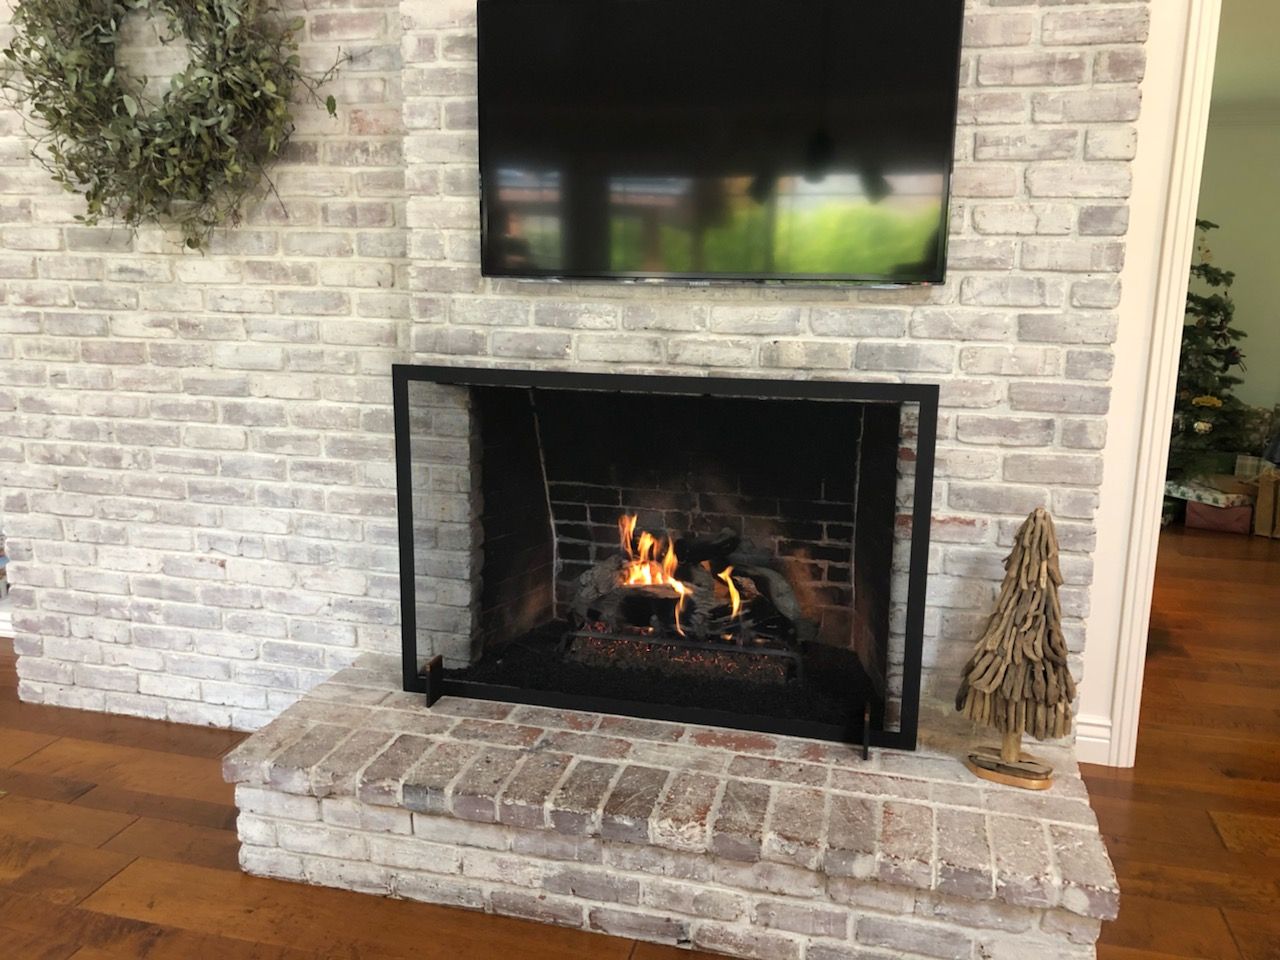 Fireplace Spark Guard New Iron It Out Dantegarganeseiii On Pinterest